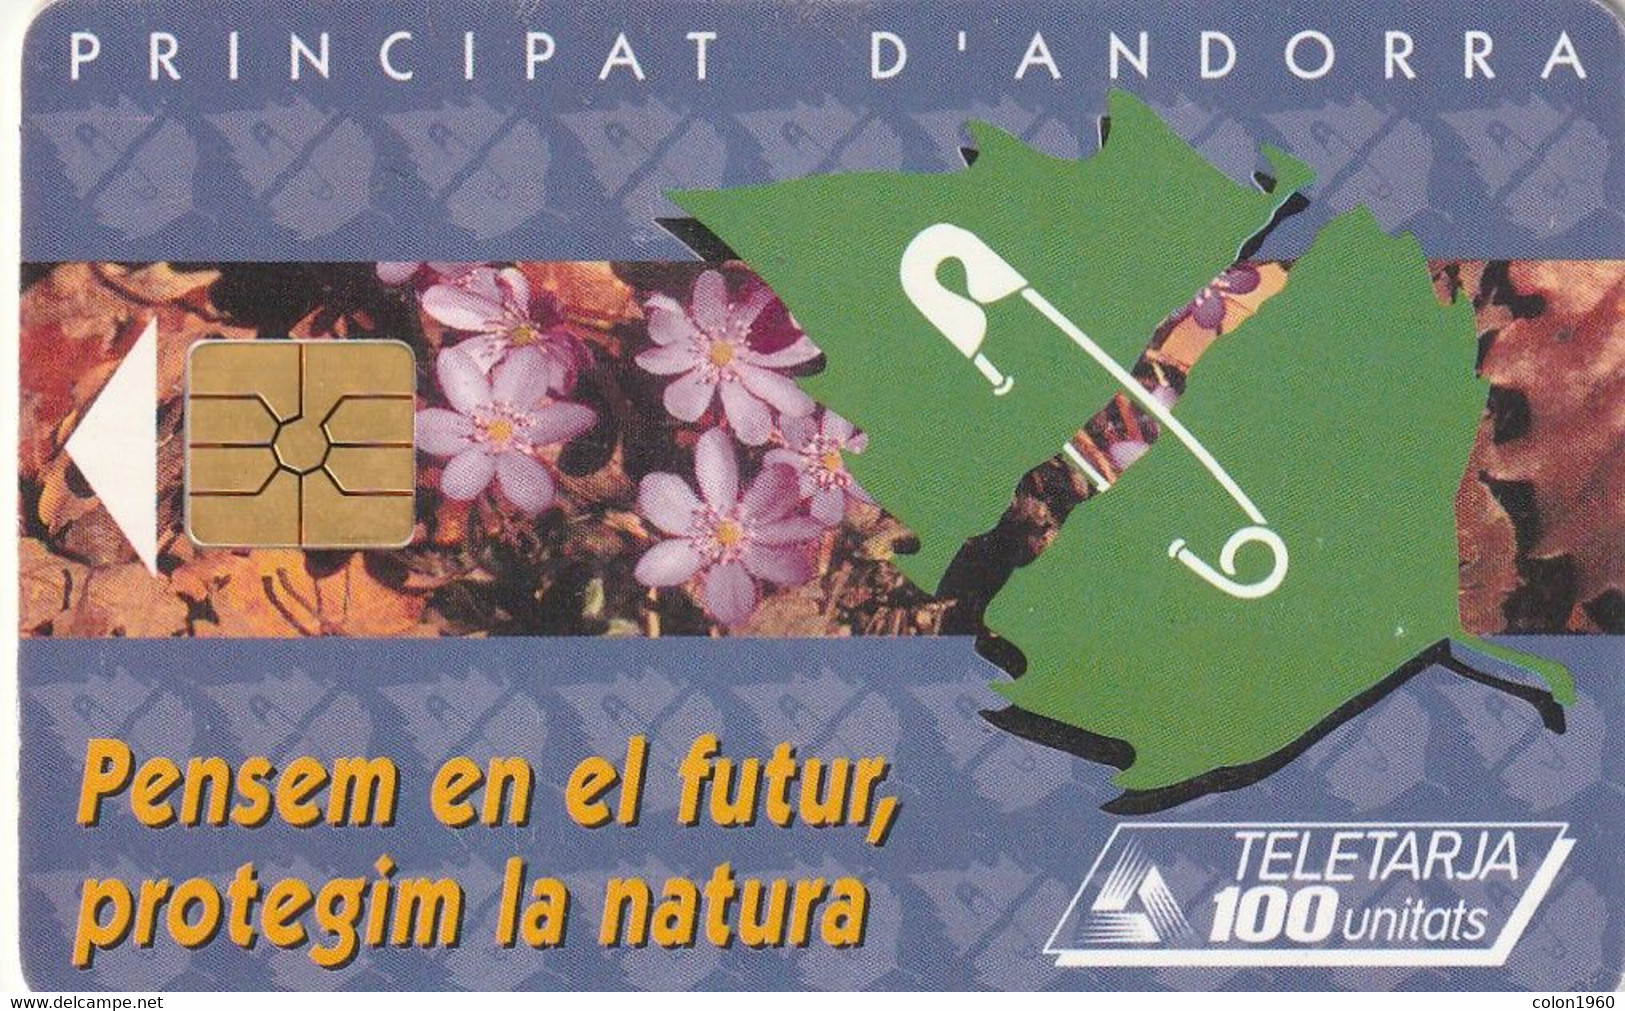 Andorra - ANDORRA. FLOWER. ADN - CONSERVACION DE LA NATURA. 1995-06. 8000  ex. AD-STA-0030. (010). CHIP RED.